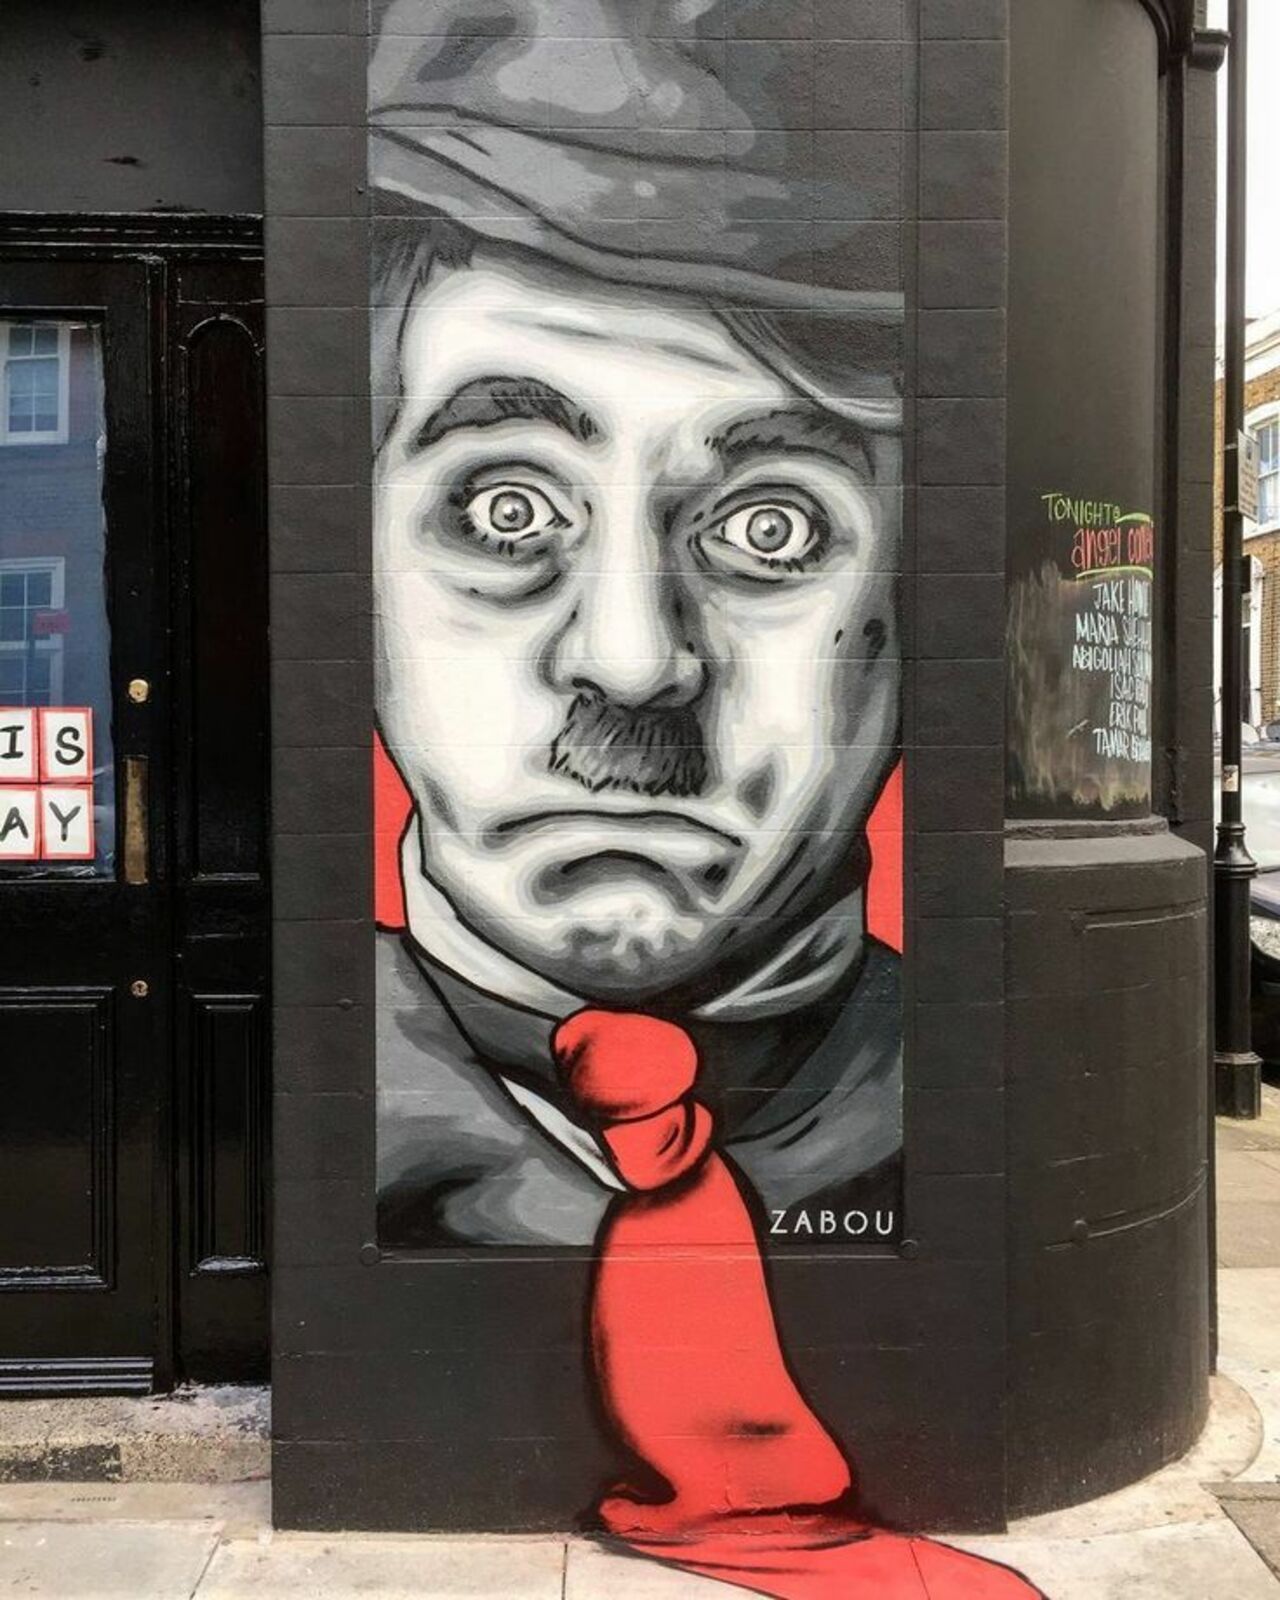 New from @zabouartist in London#streetart #art #graffiti #mural https://t.co/xoSO6DaDZp